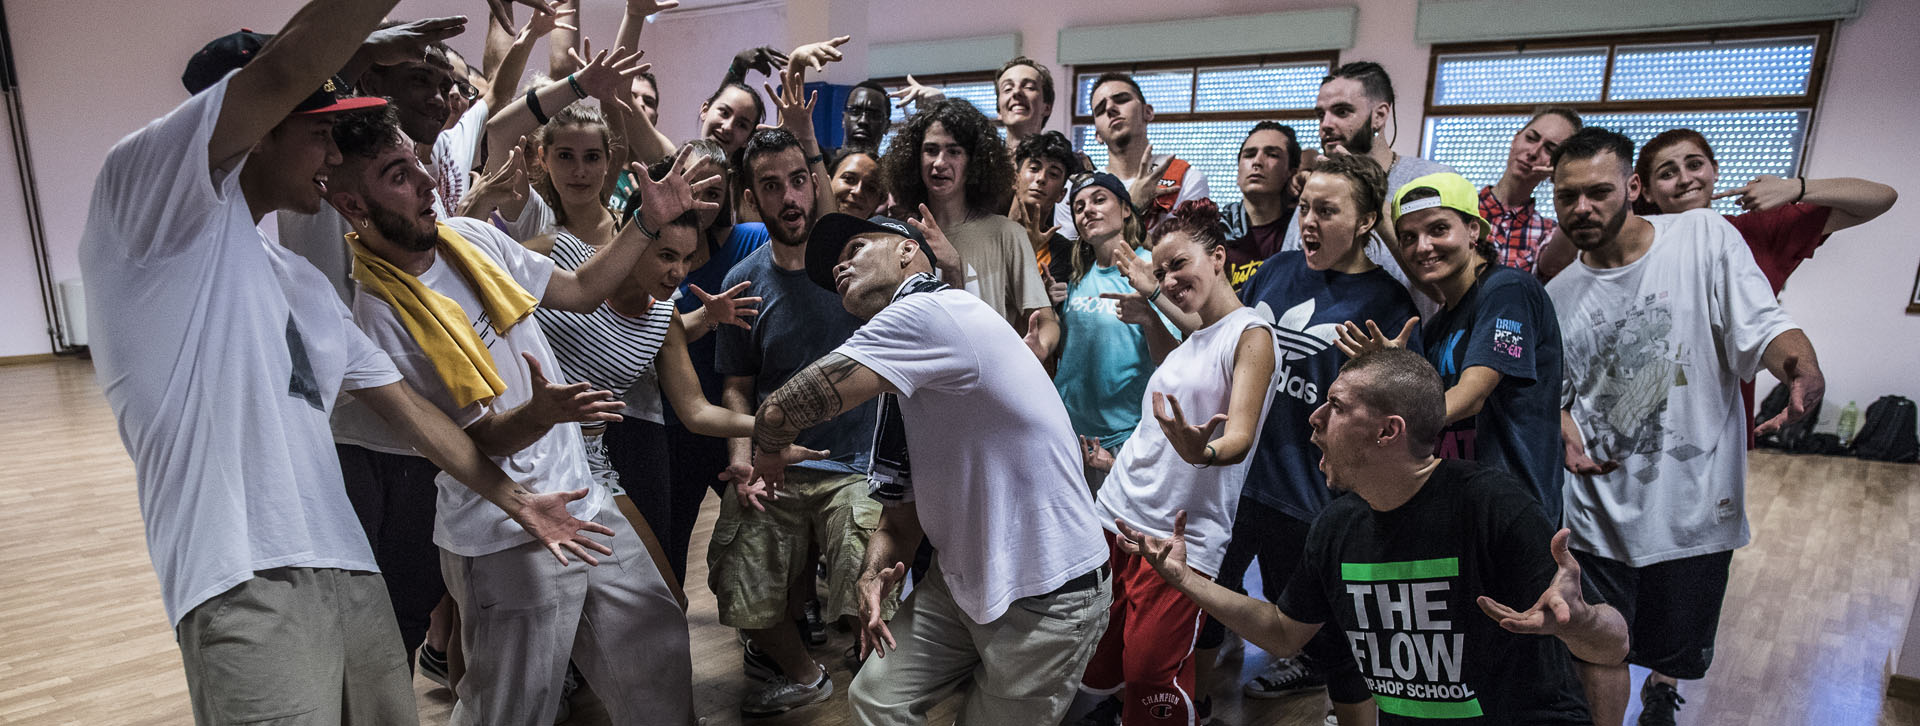 The Week Street Dance Summer Camp Cesenatico Italy Workshop Stage Hip Hop Festival